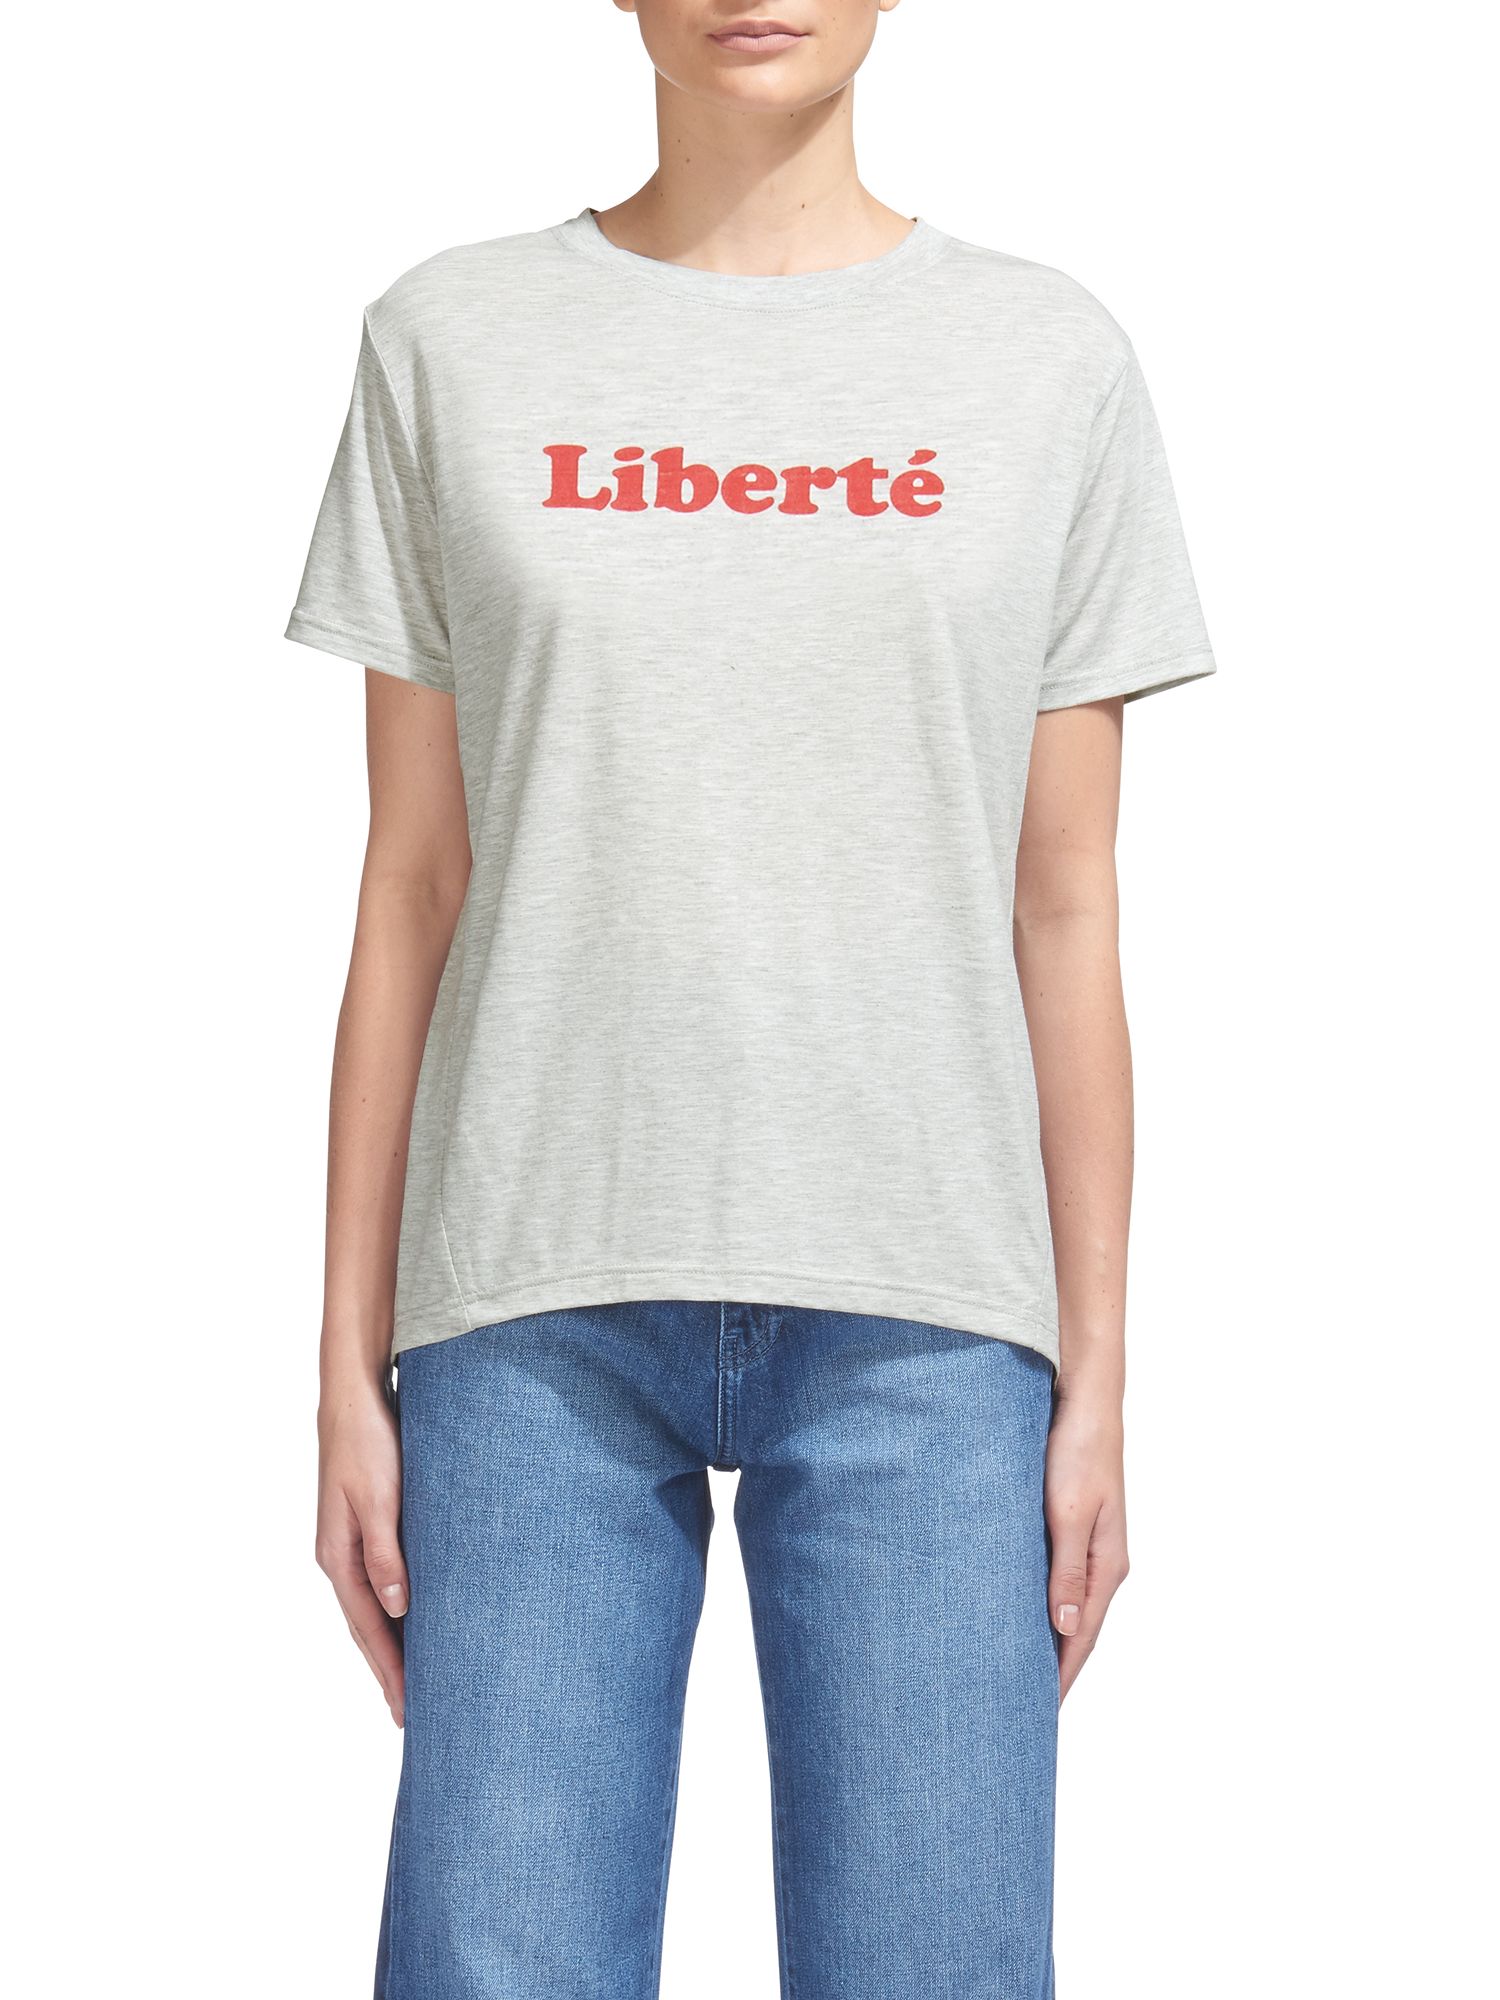 Whistles Liberte T-Shirt, Grey Marl